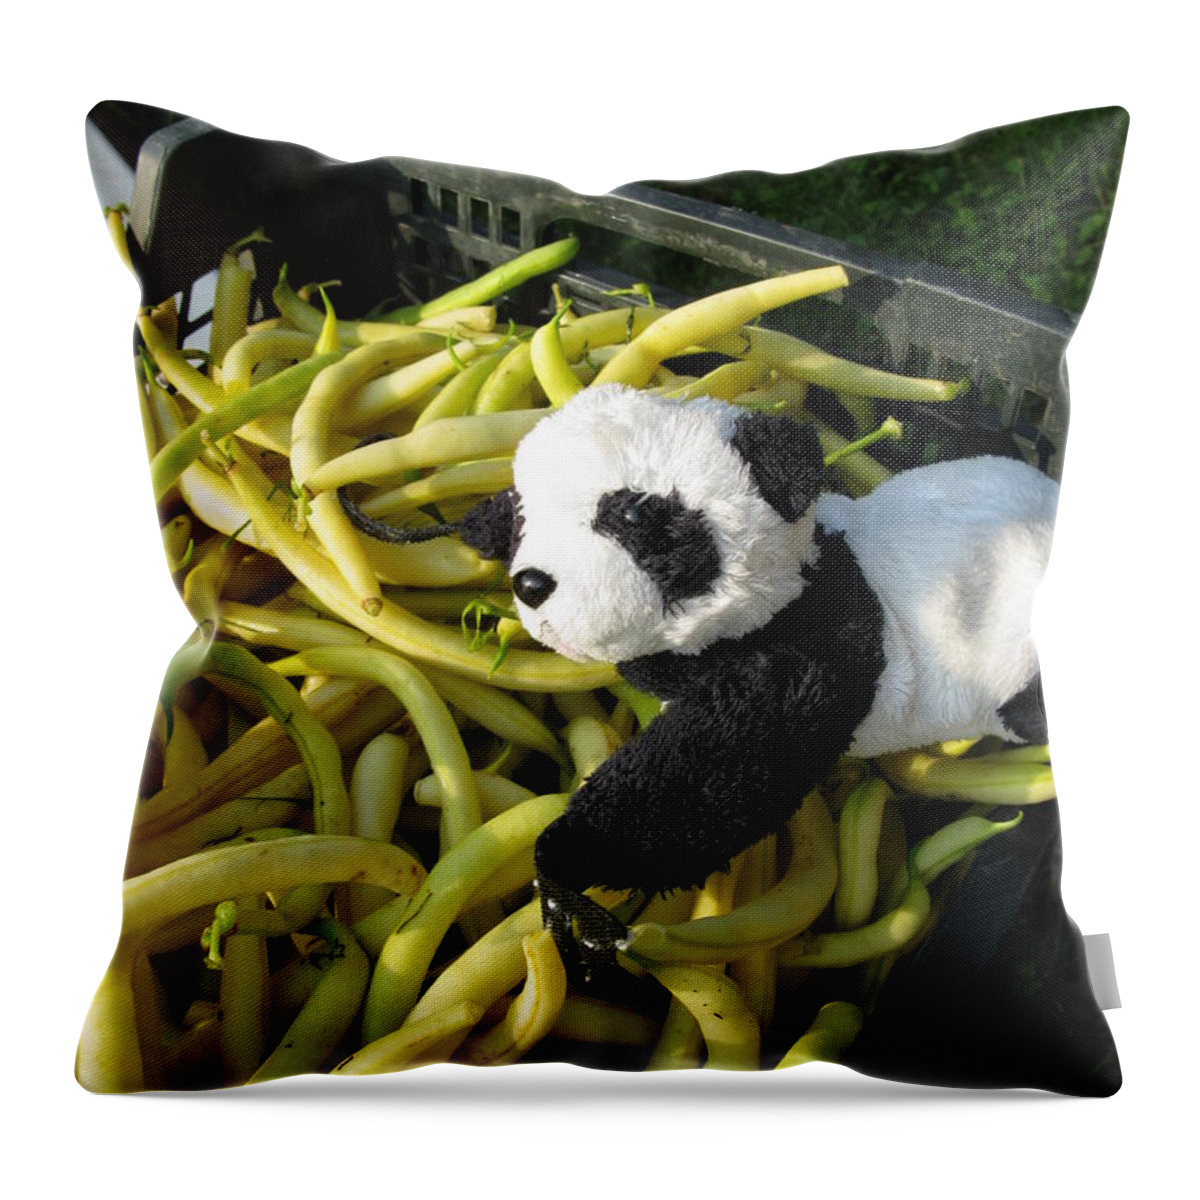 Baby Panda Throw Pillow featuring the photograph Selling beans by Ausra Huntington nee Paulauskaite